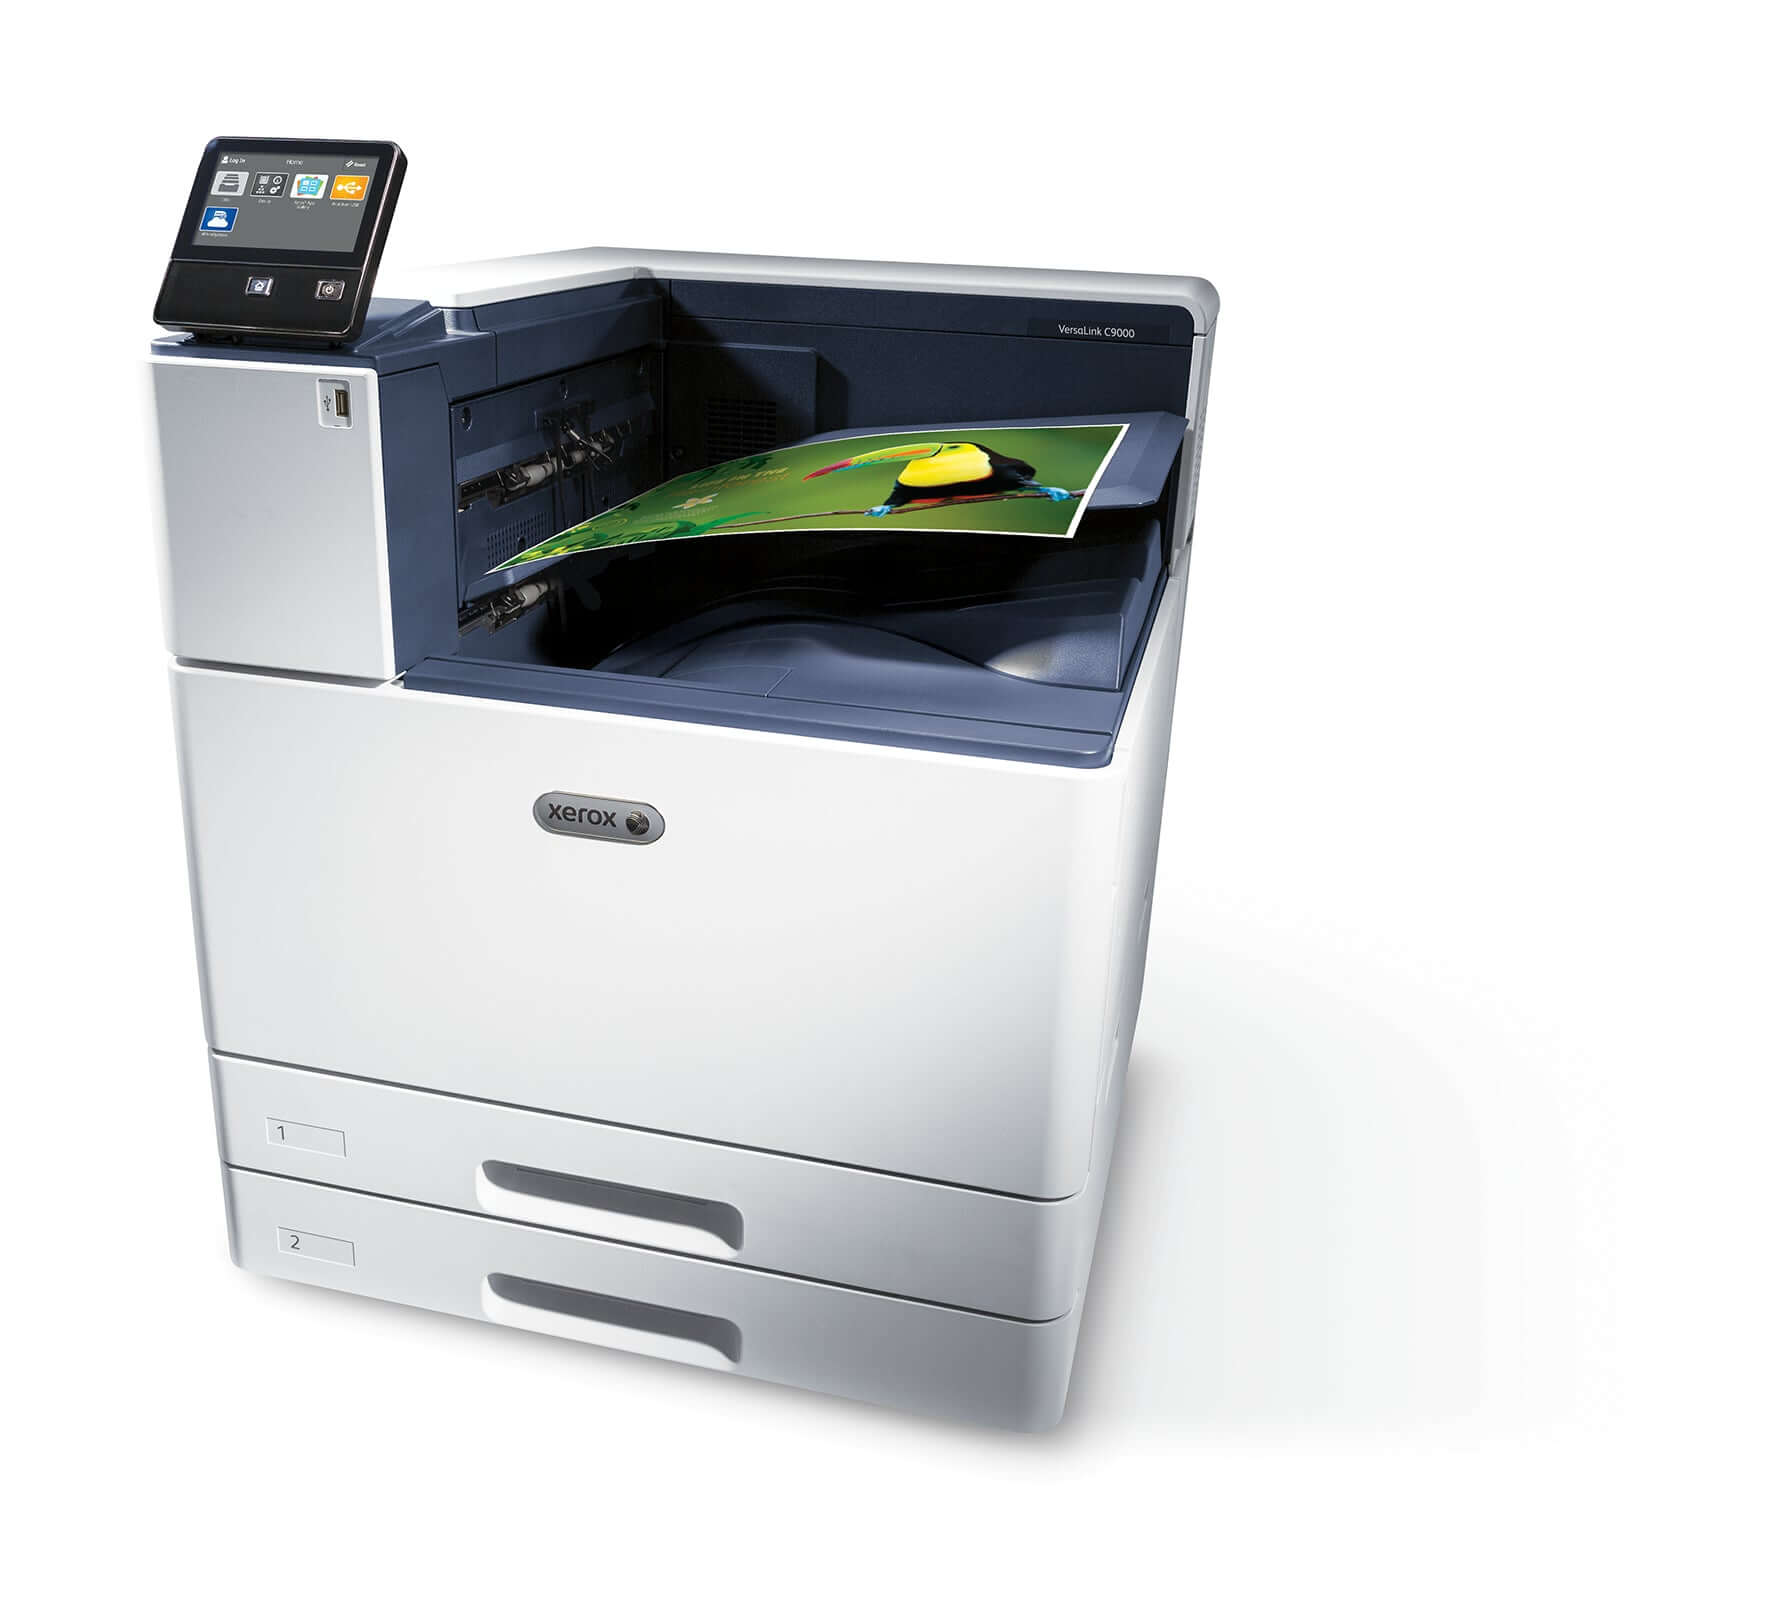 Xerox Printer + Wireless C9000V/DTW for VersaLink C9000 Printer / 2 x 520 paper trays / Wireless Adapter